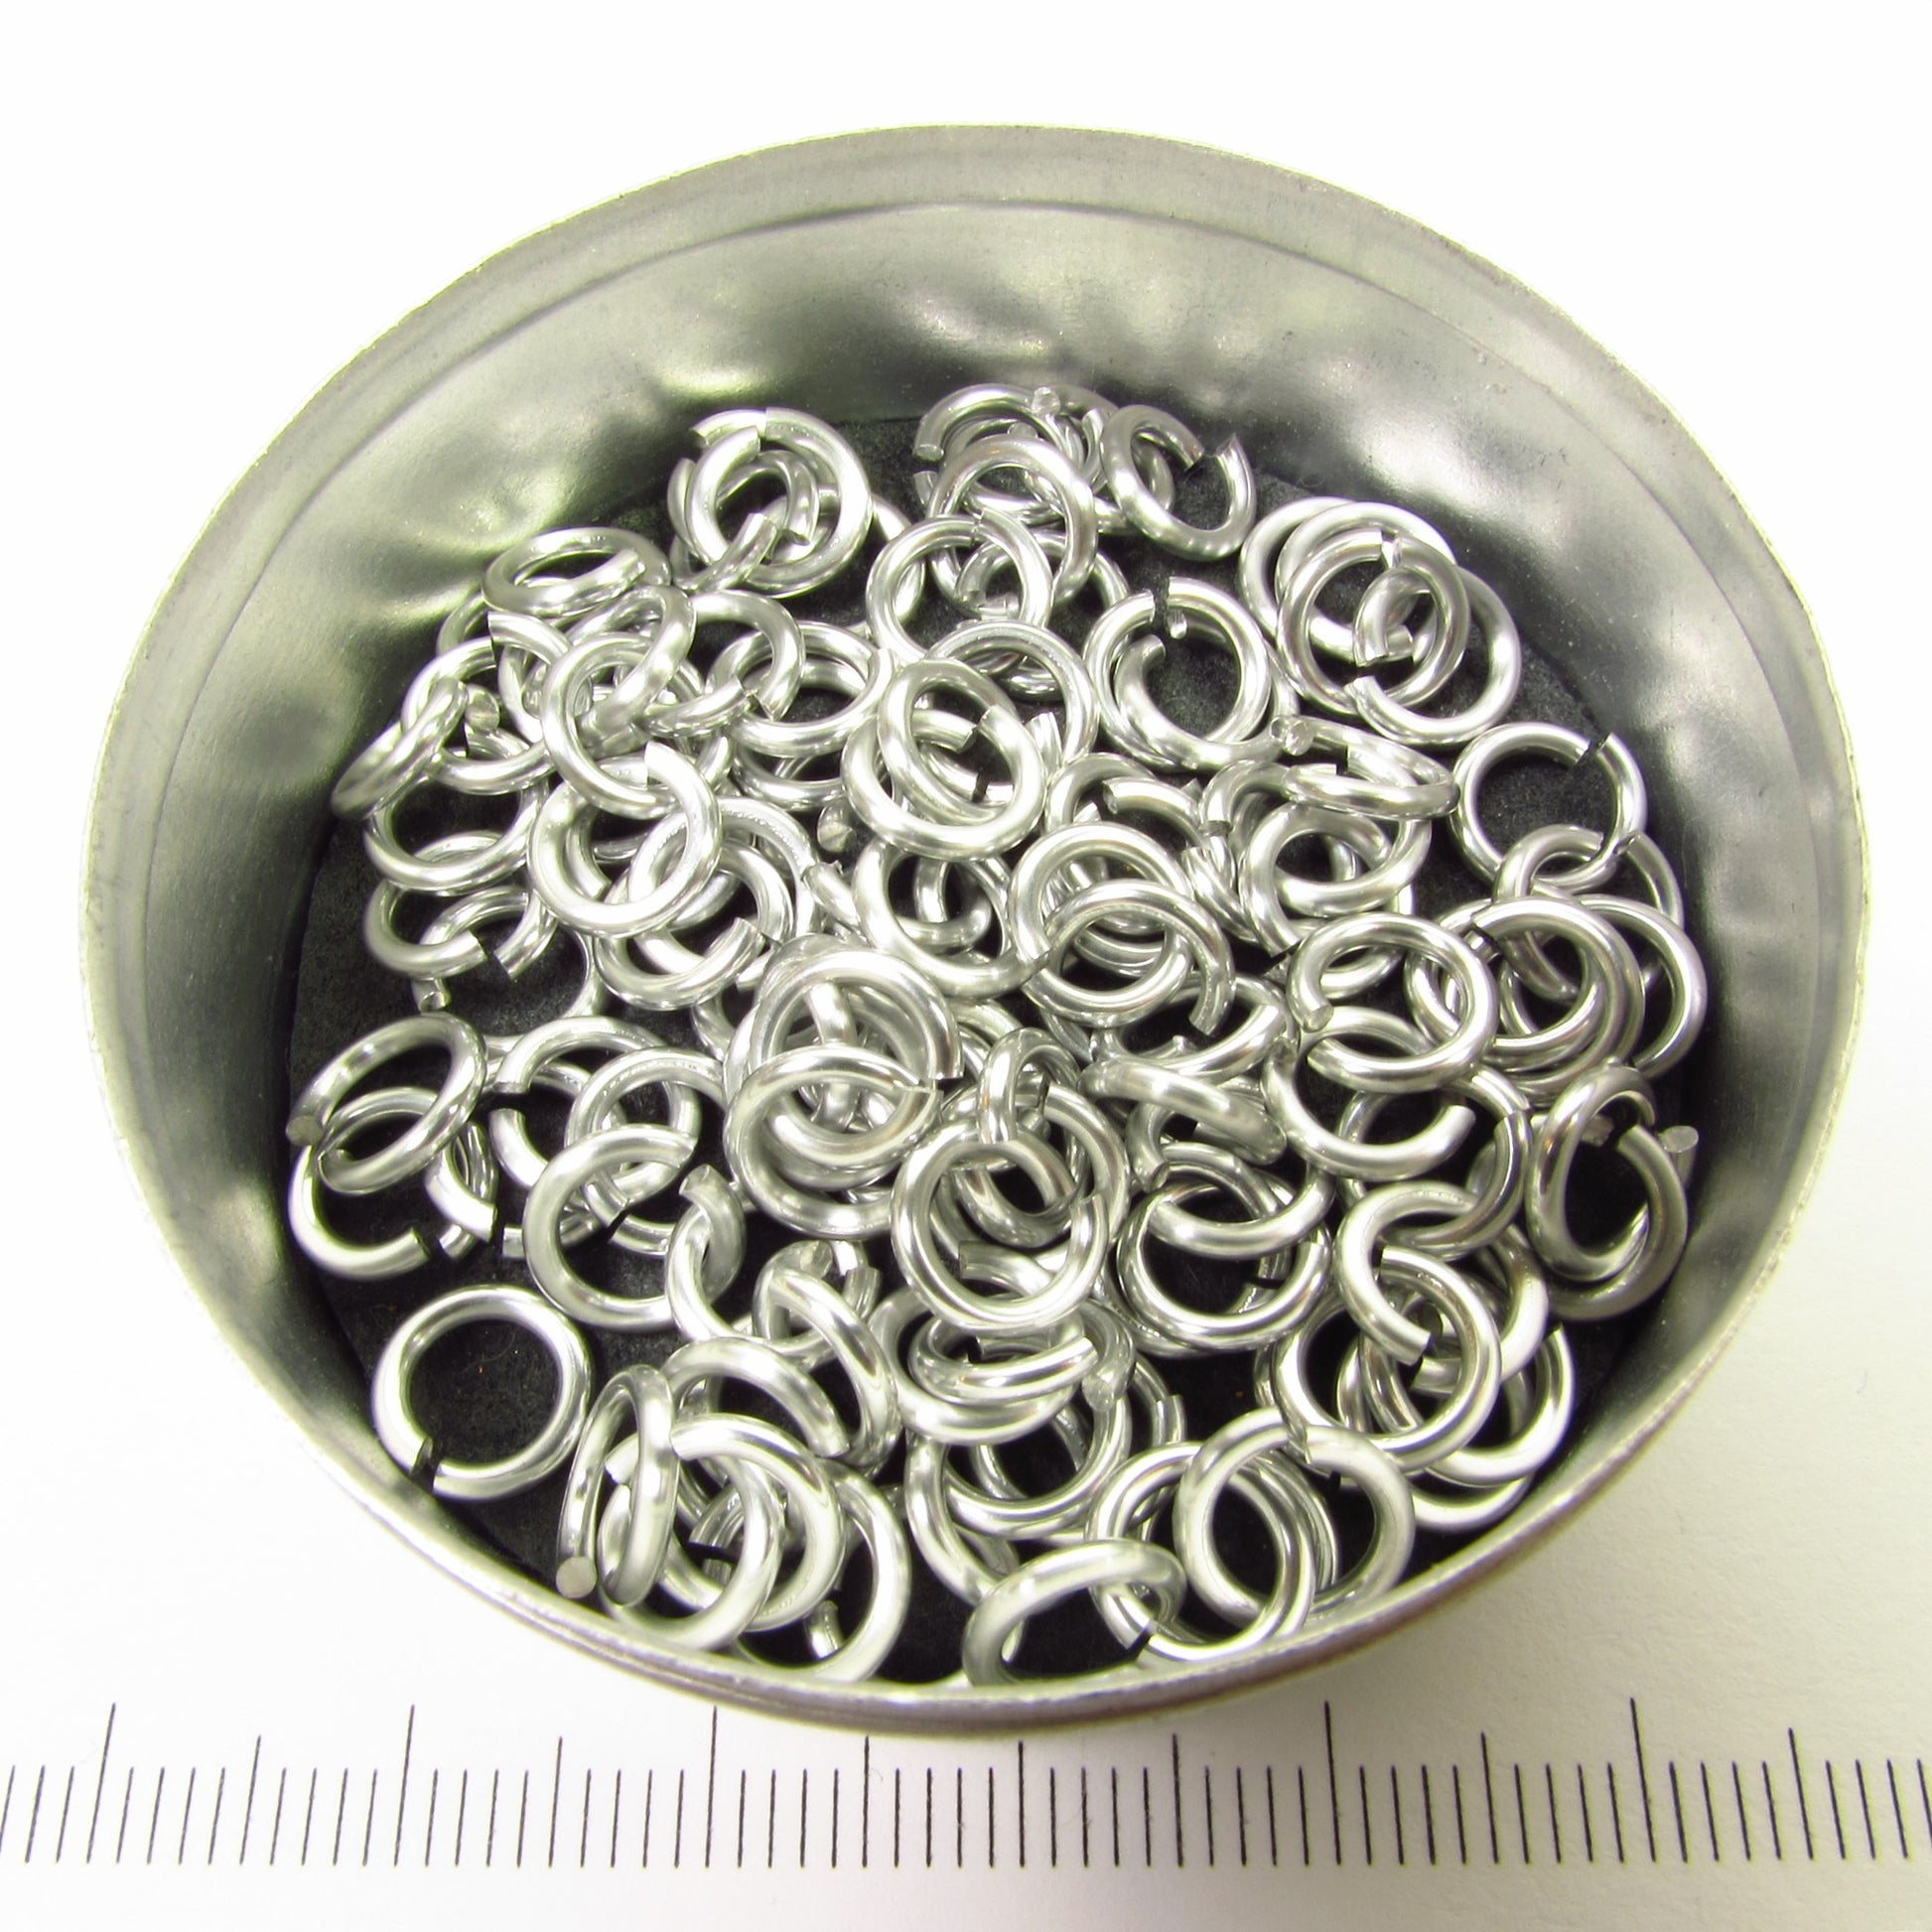 Glanzend zilverkleurig aluminium, 1,2x5,0 mm